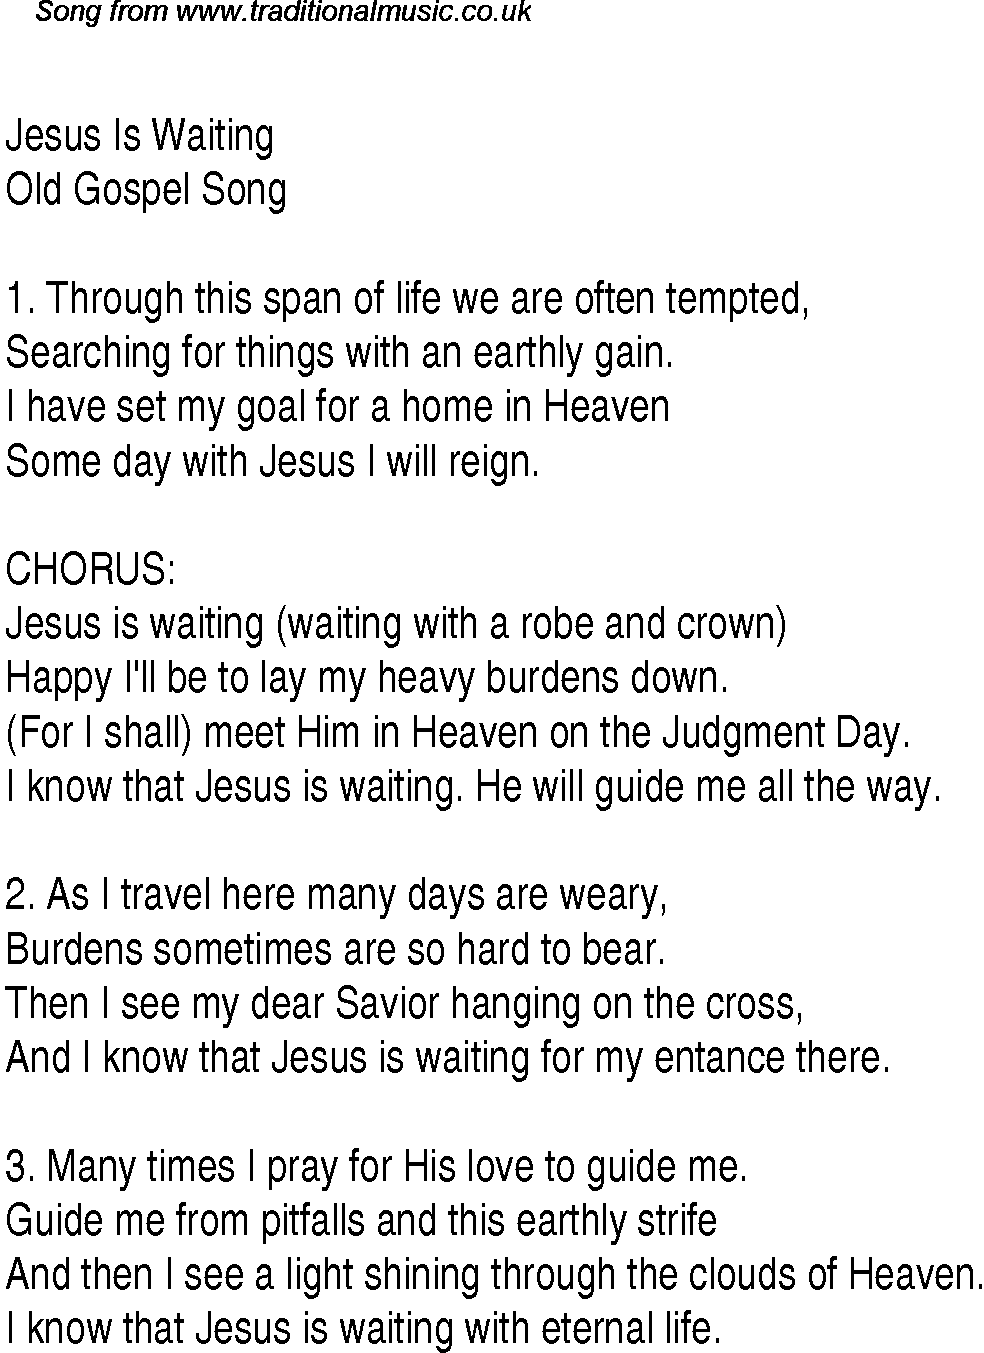 Gospel Song: jesus-is-waiting, lyrics and chords.